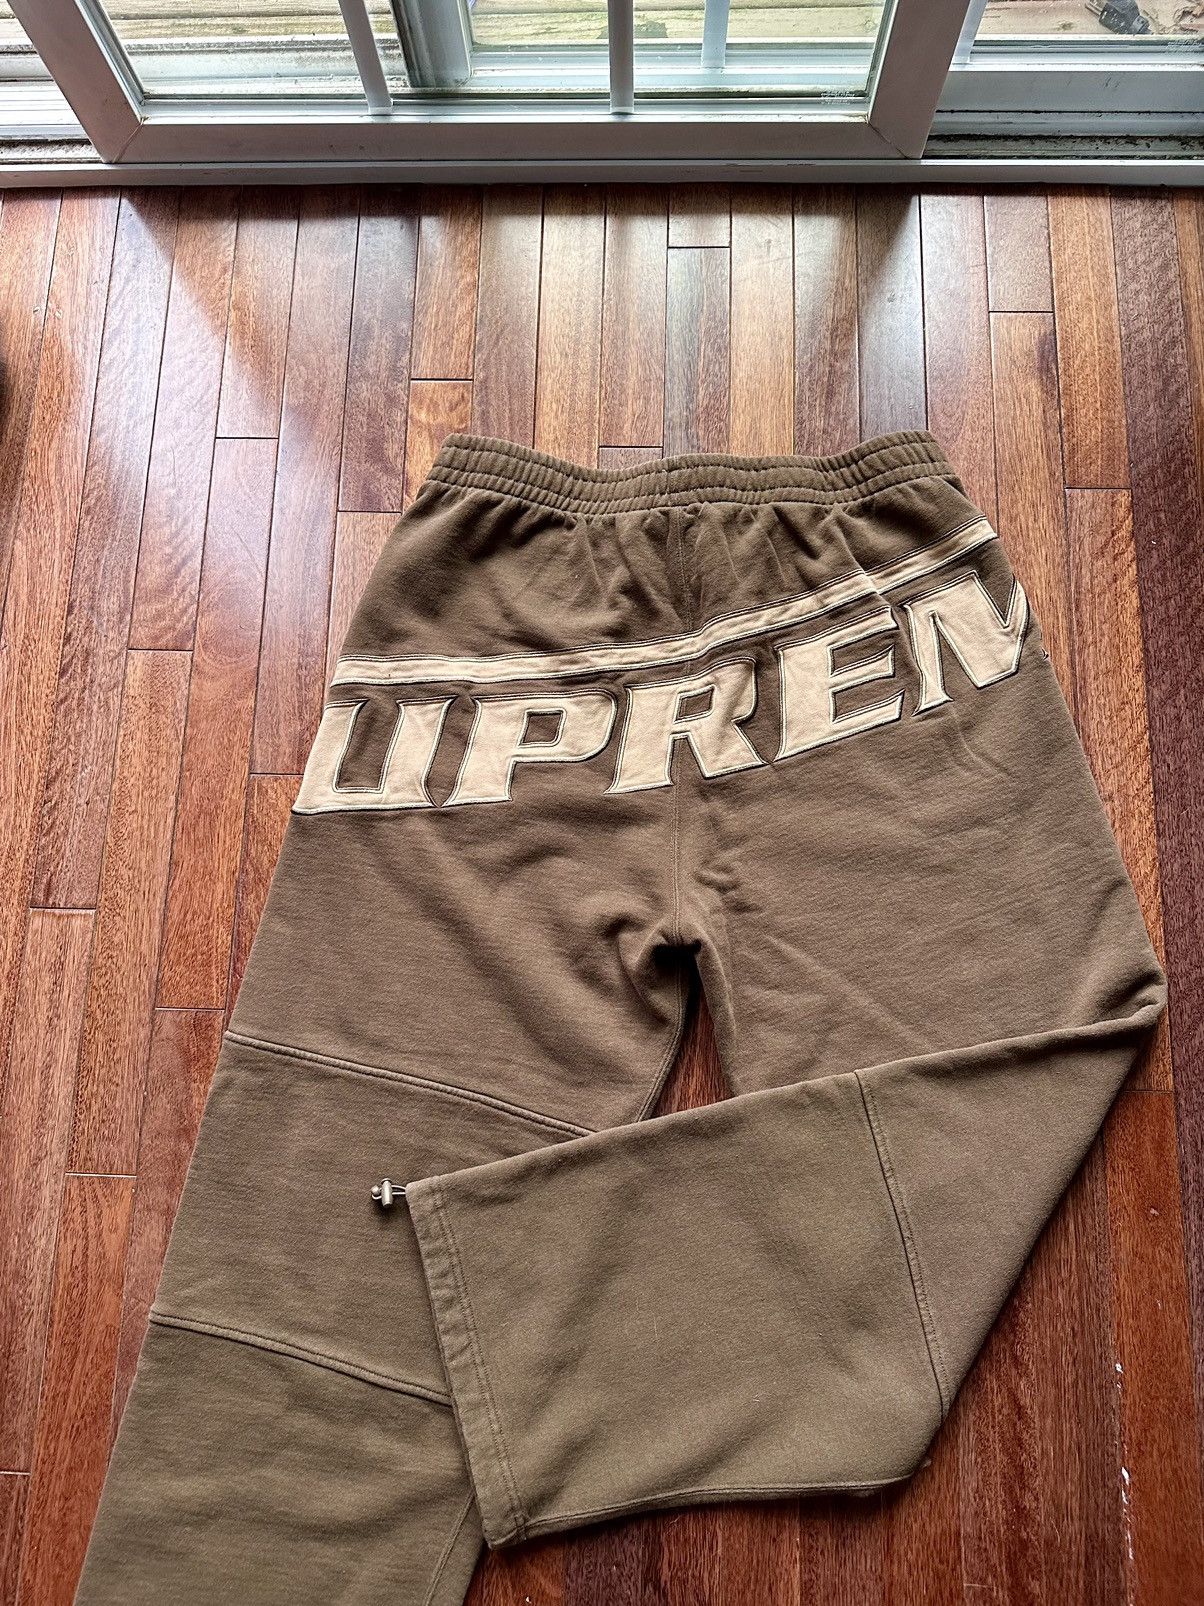 Supreme Supreme Wrapped Sweatpants - Brown - XL | Grailed